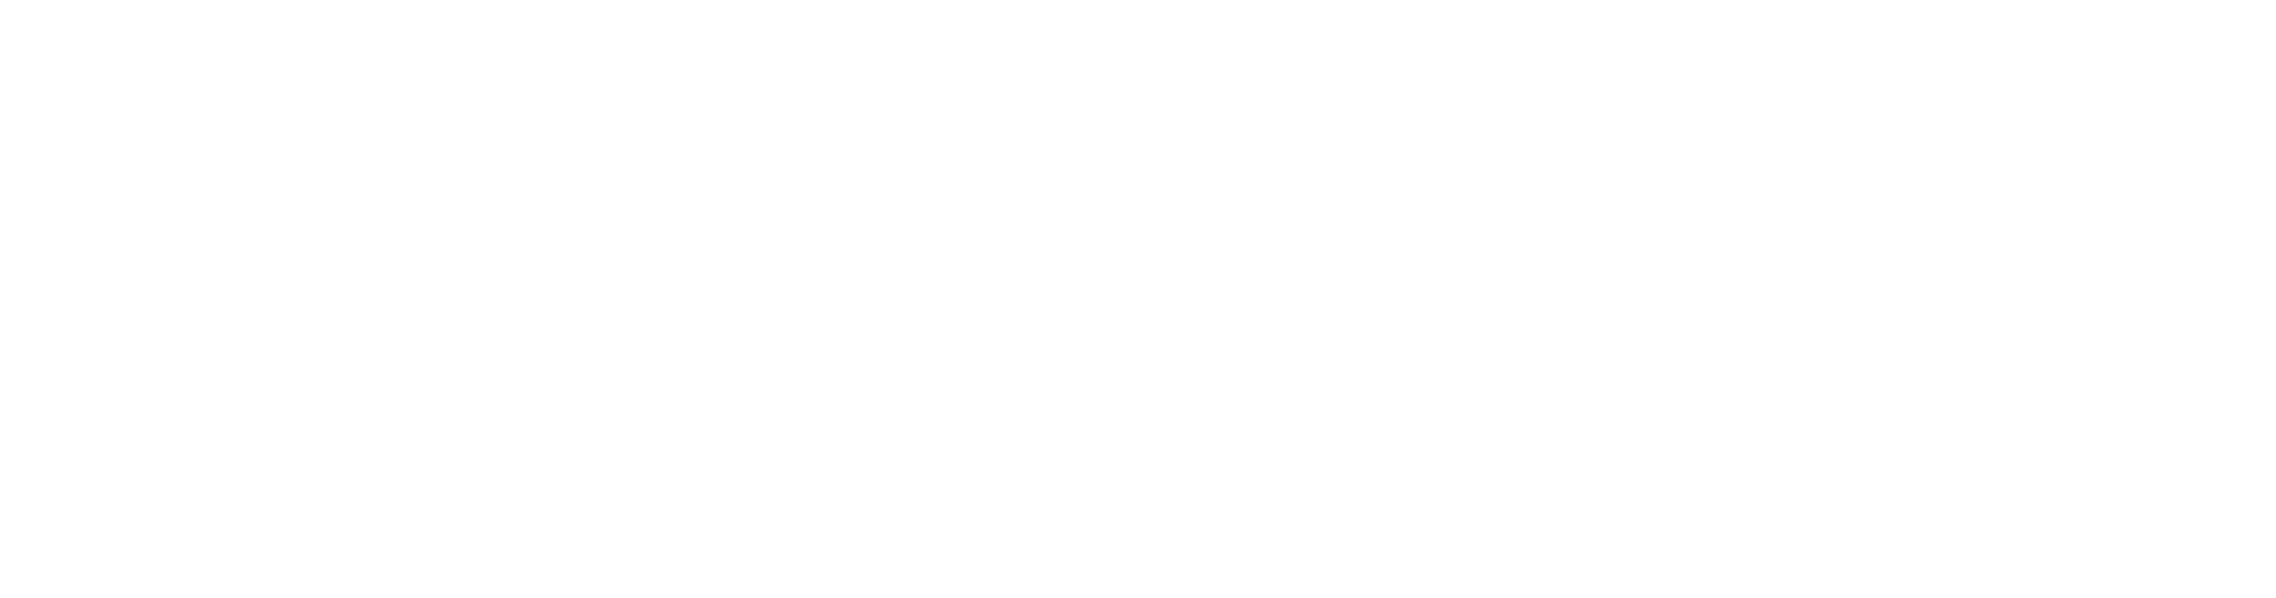 Leonard Joel Logo